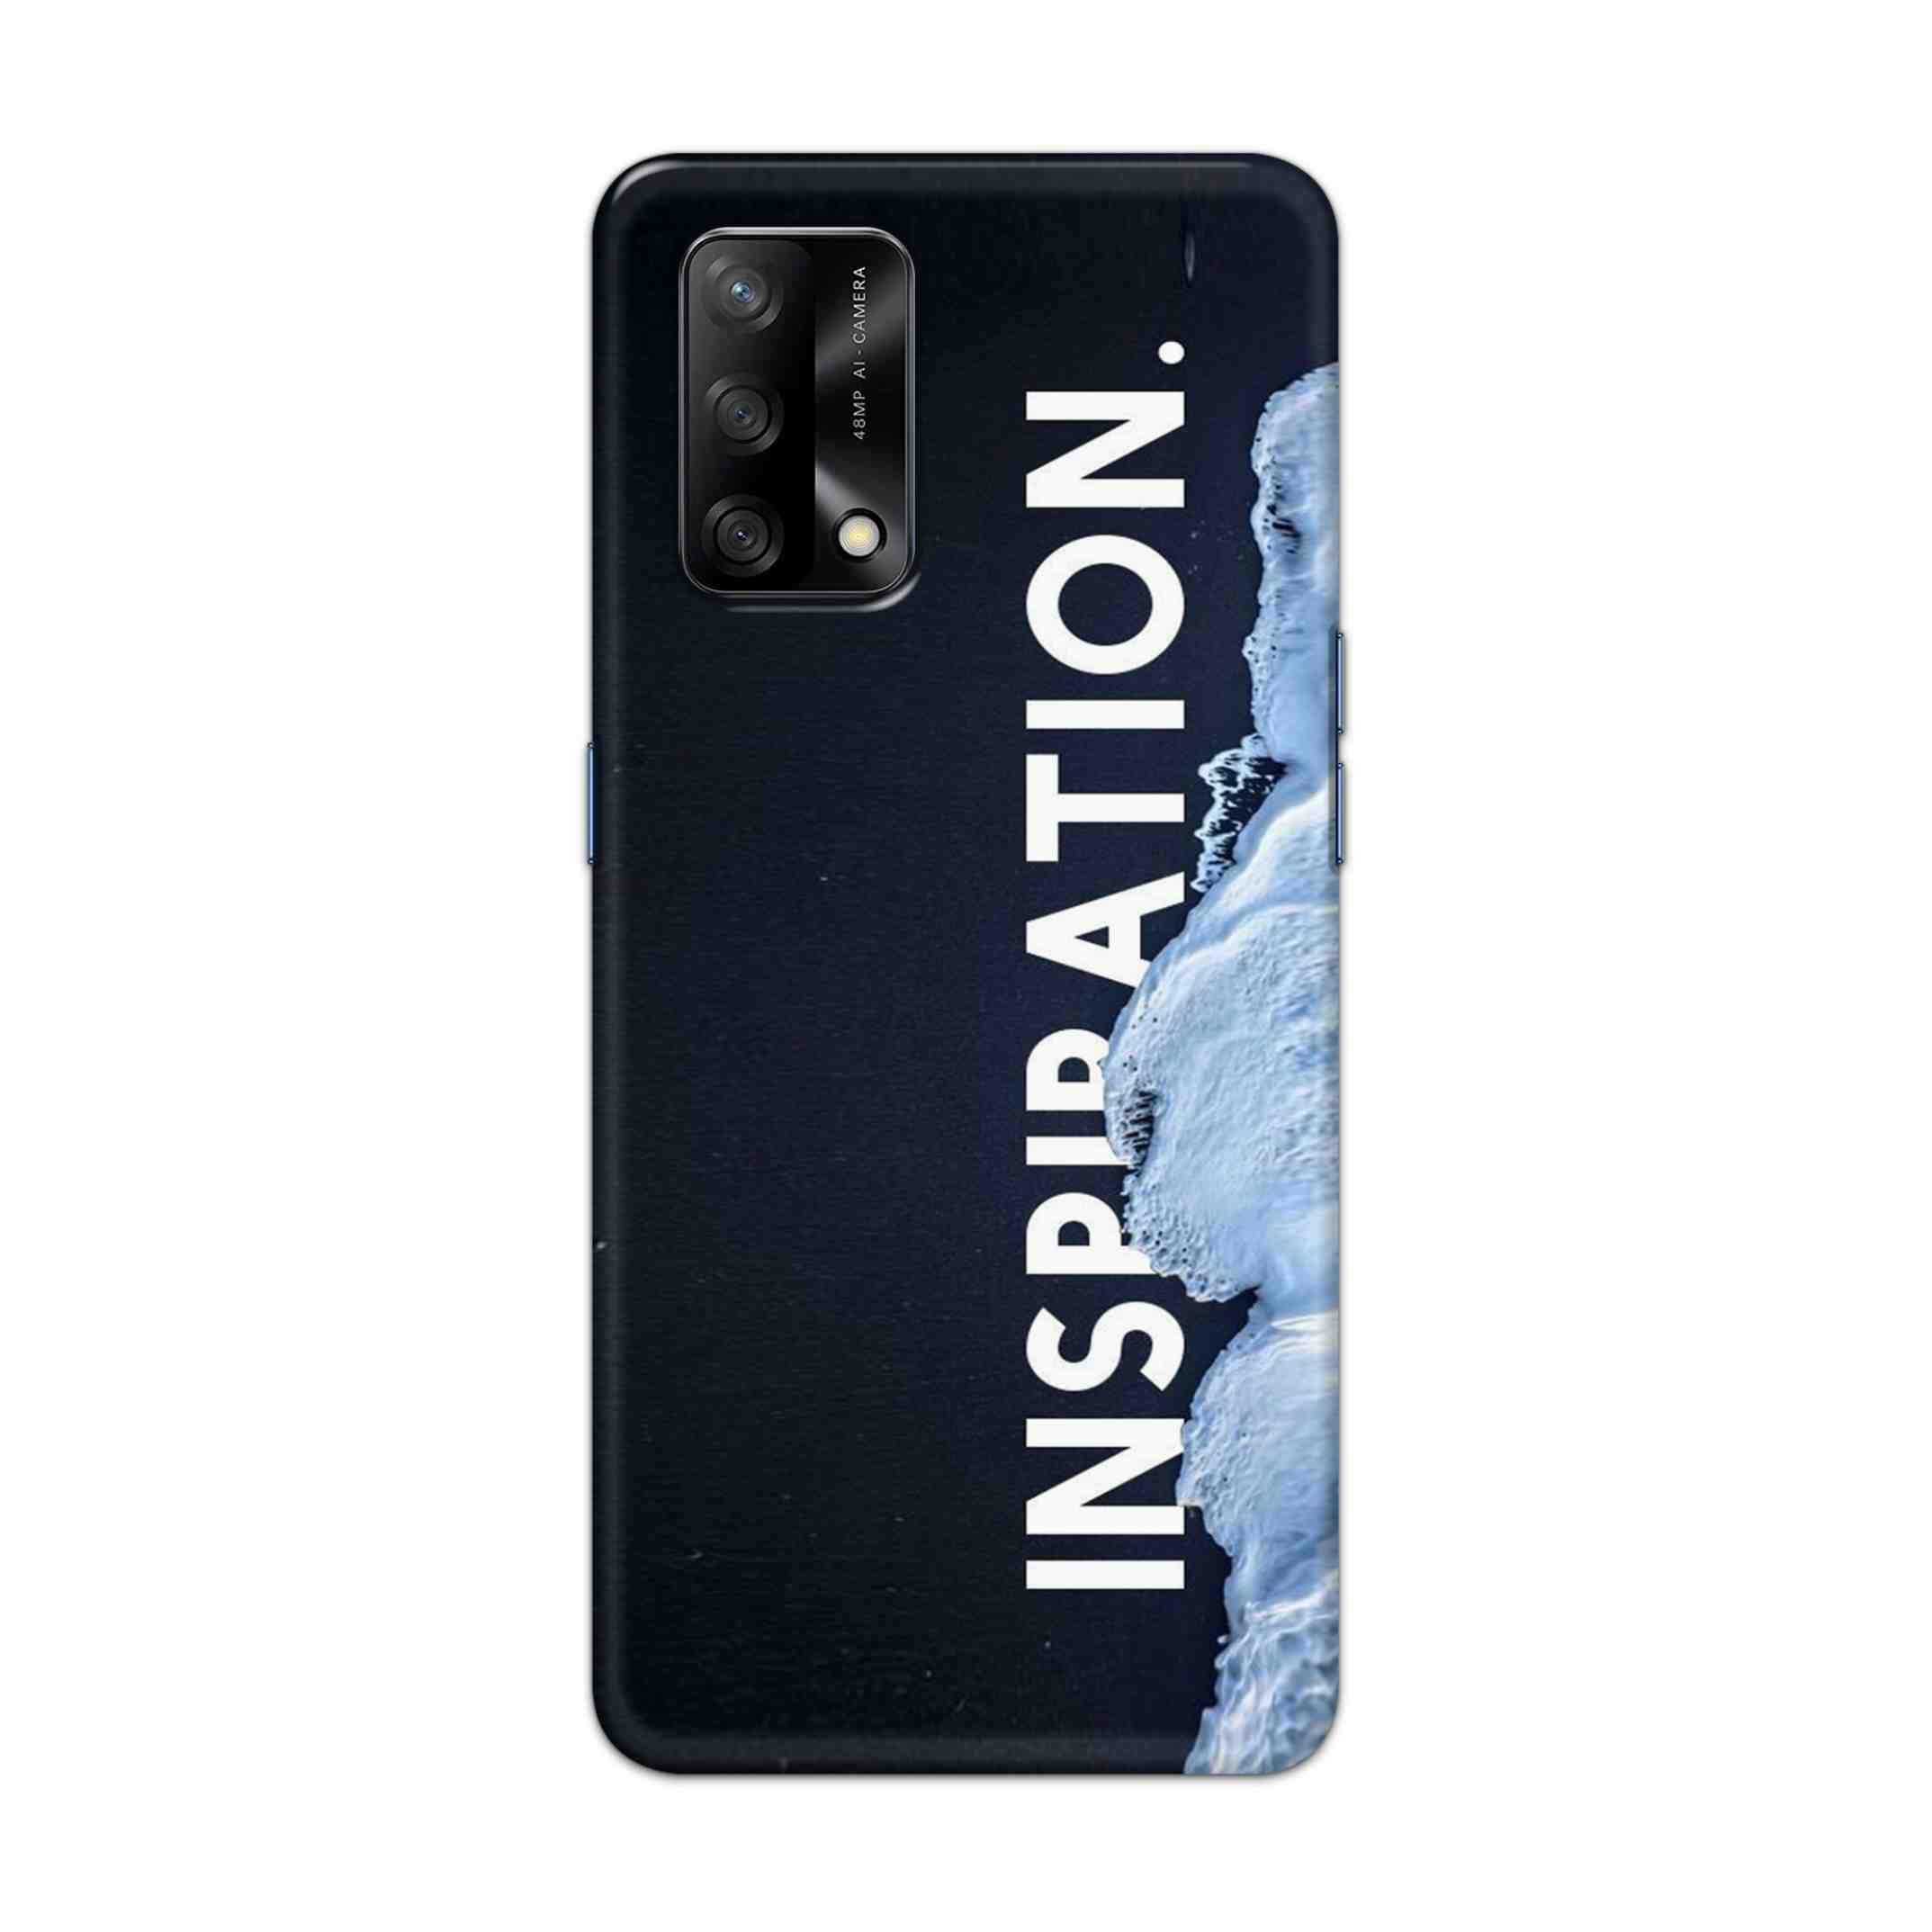 Buy Inspiration Hard Back Mobile Phone Case Cover For Oppo F19 Online